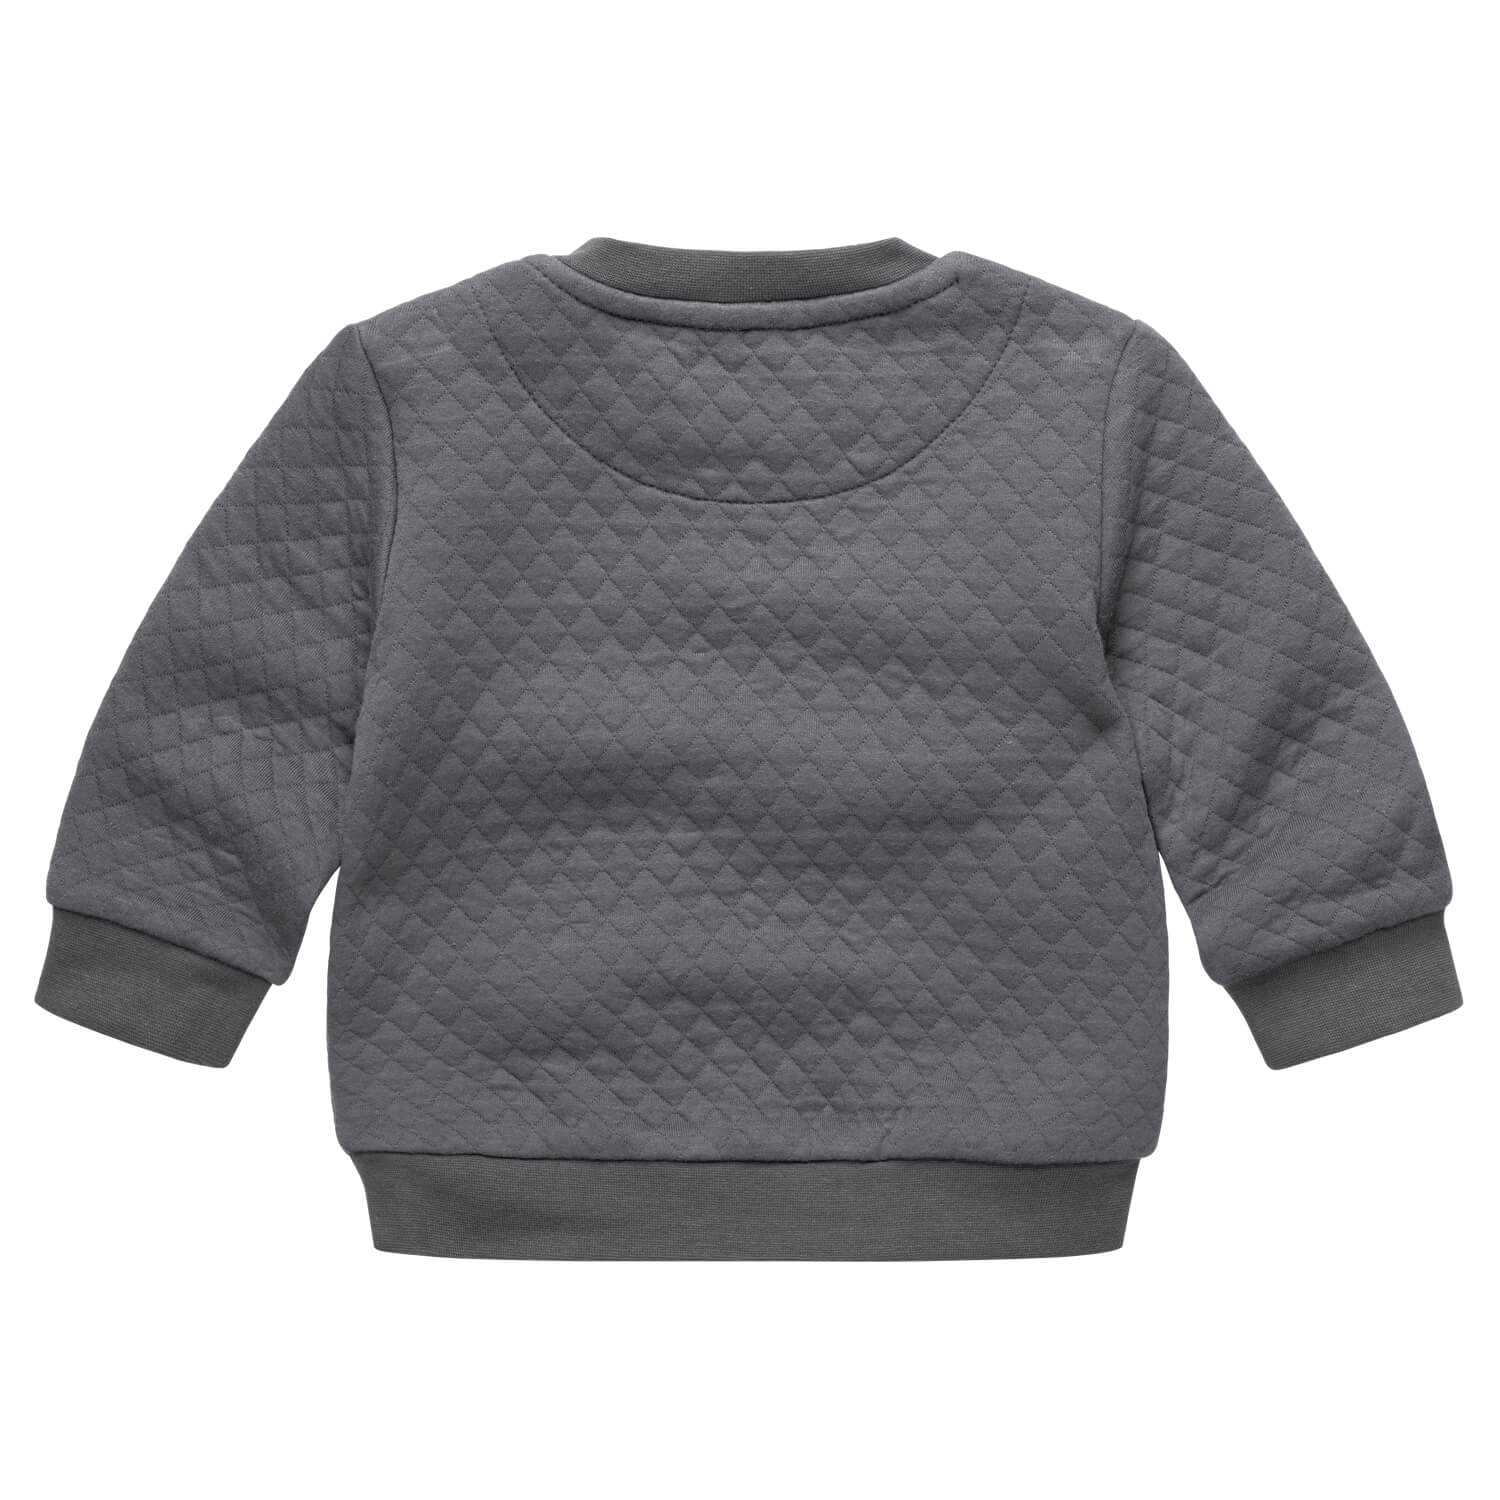 Bild 2: Baby Sweater Dark